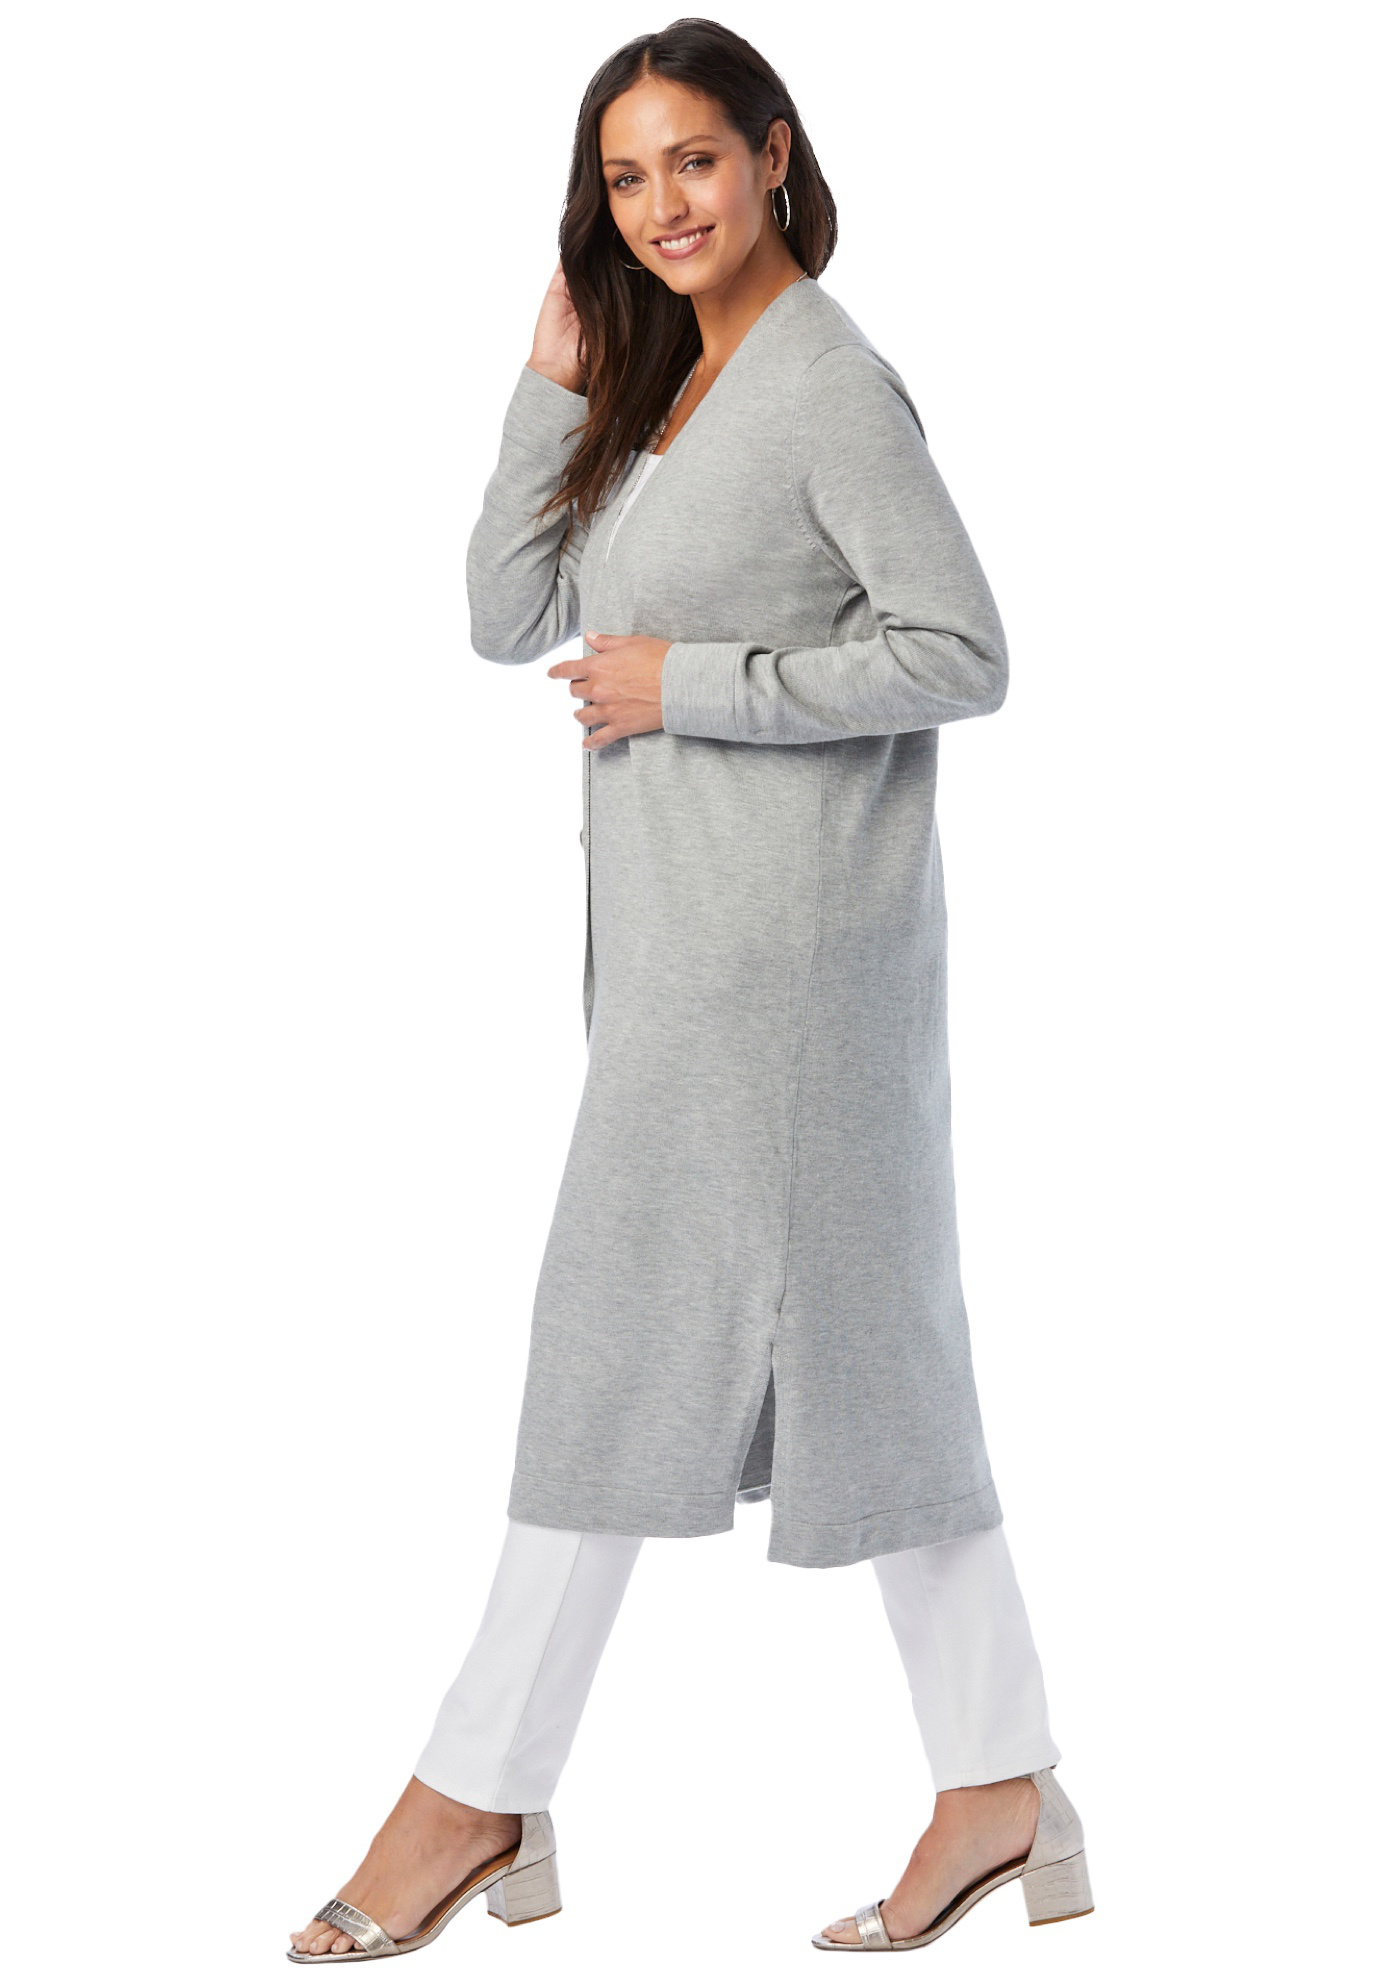 Jessica London Women's Plus Size Fine Gauge Duster Cardigan Cardigan Sweater - image 4 of 5